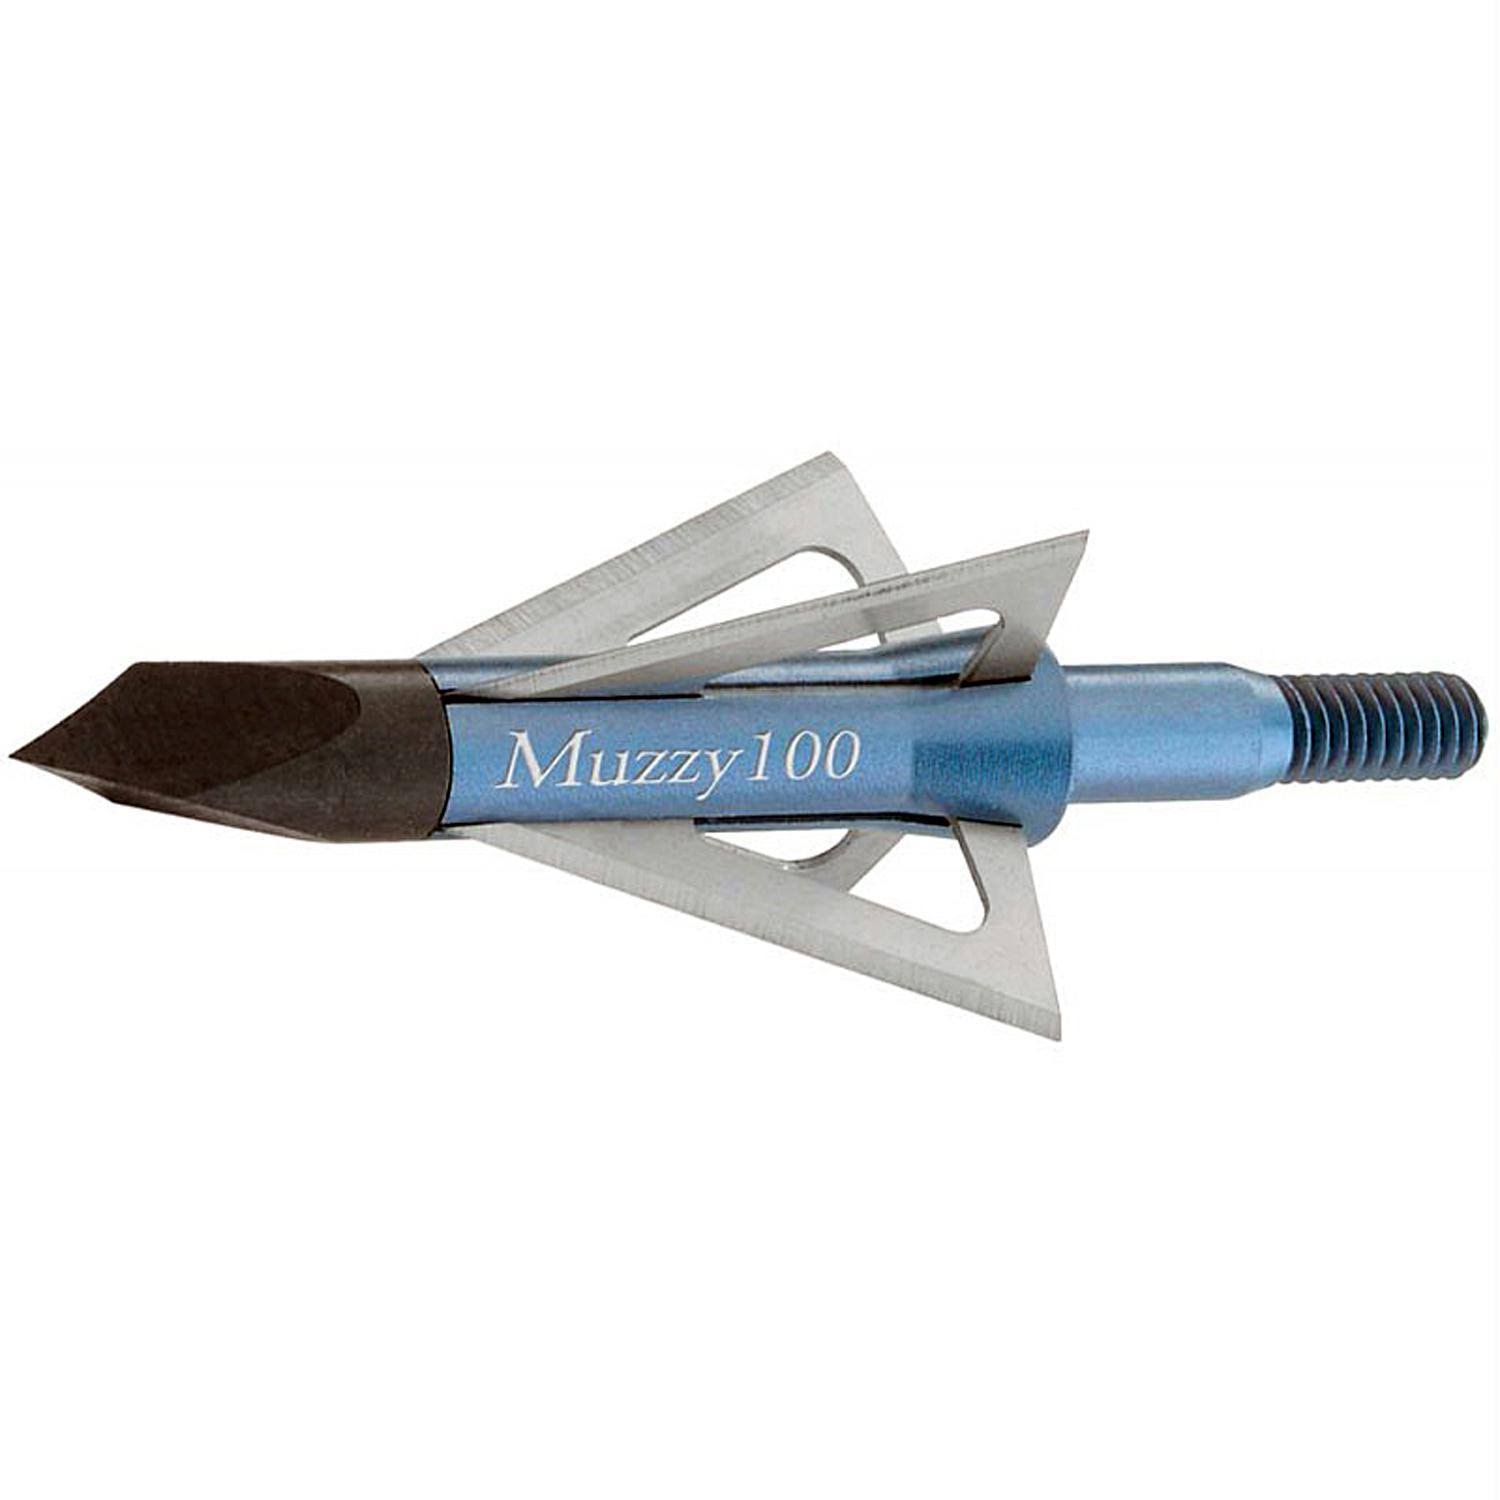 Muzzy Bowhunting Broadheads - 4 Blade, 1" Cutting Diameter 90 or 100 Grain, 6pk